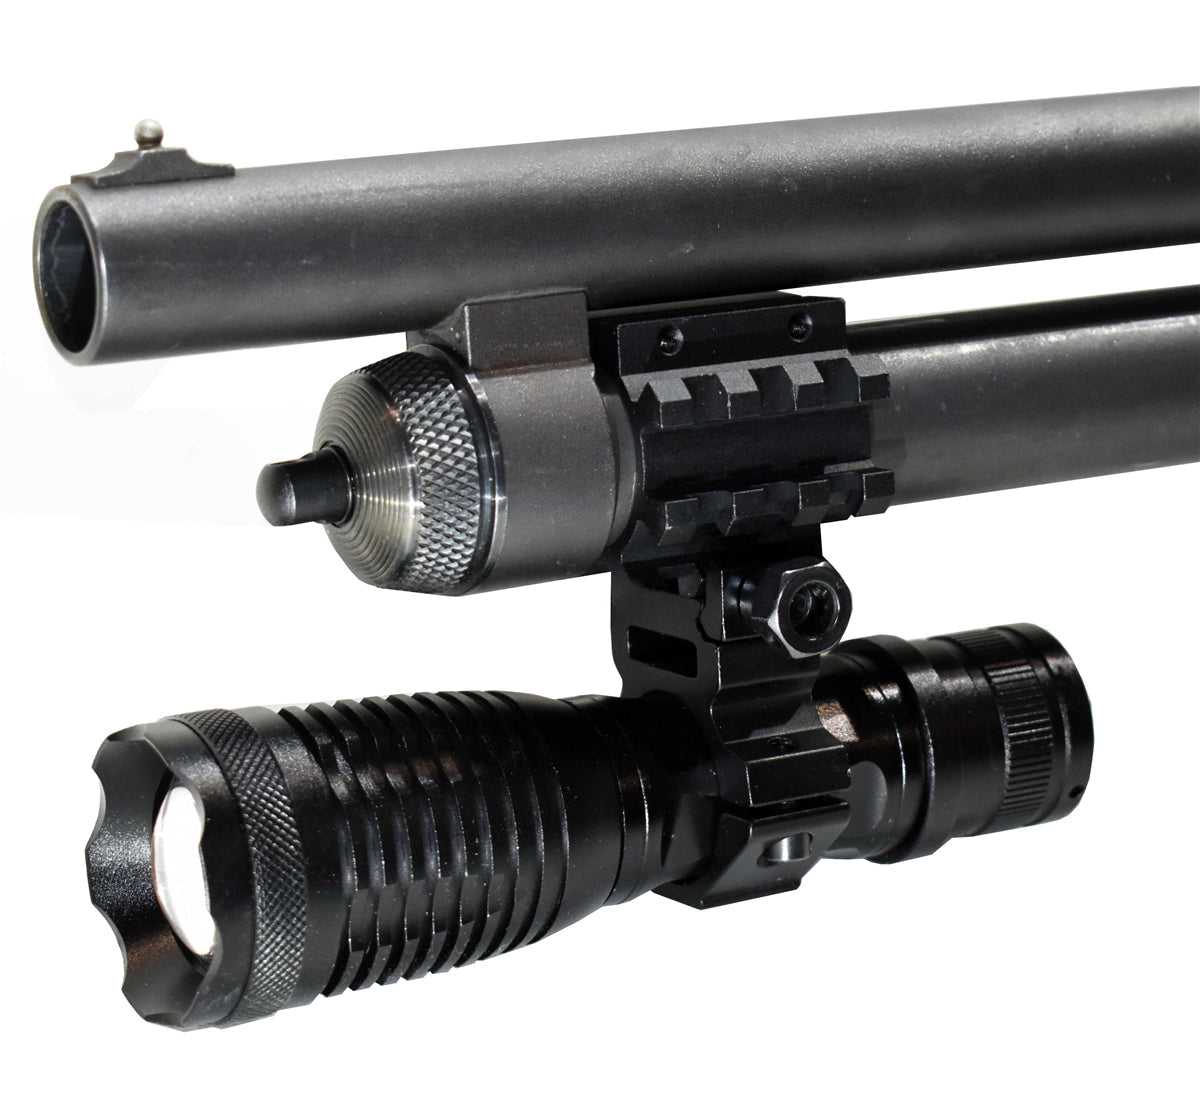 Tactical 1500 Lumen Flashlight With Mount Compatible With Mossberg 500 12 Gauge Shotgun.